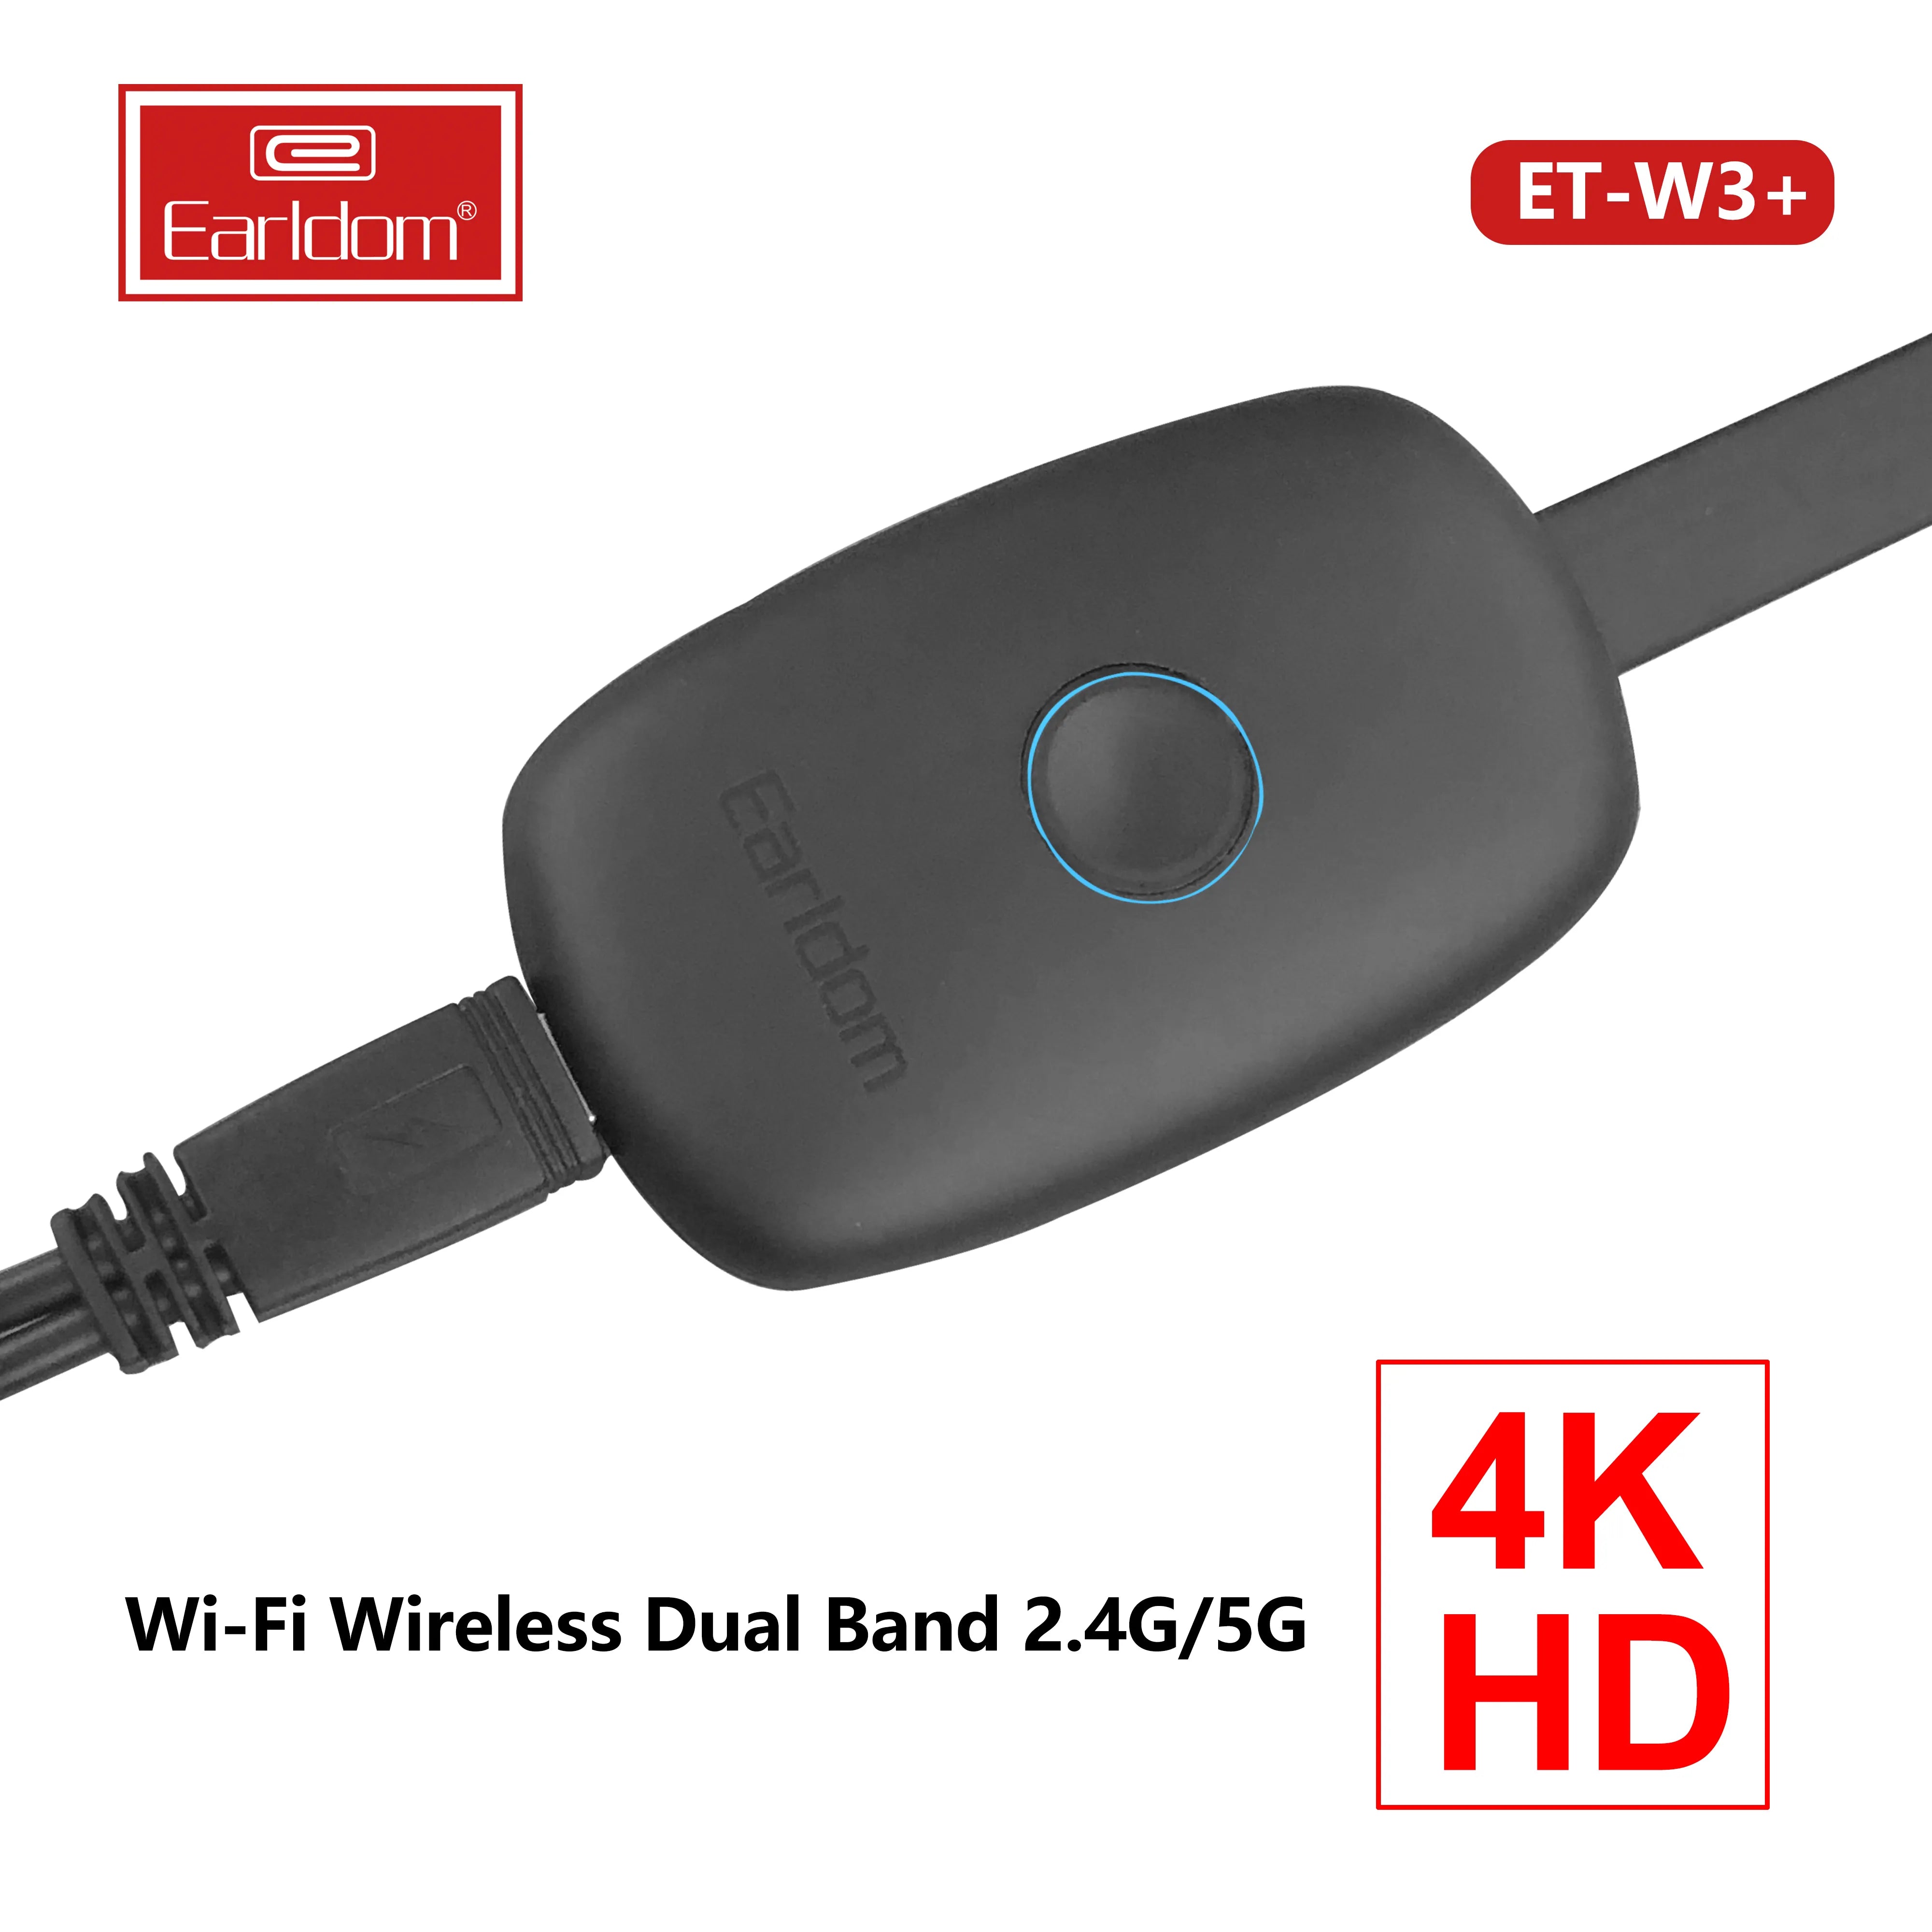 Wireless WIFI TV Dongle, 1080P HD Wireless Wifi Display Dongle